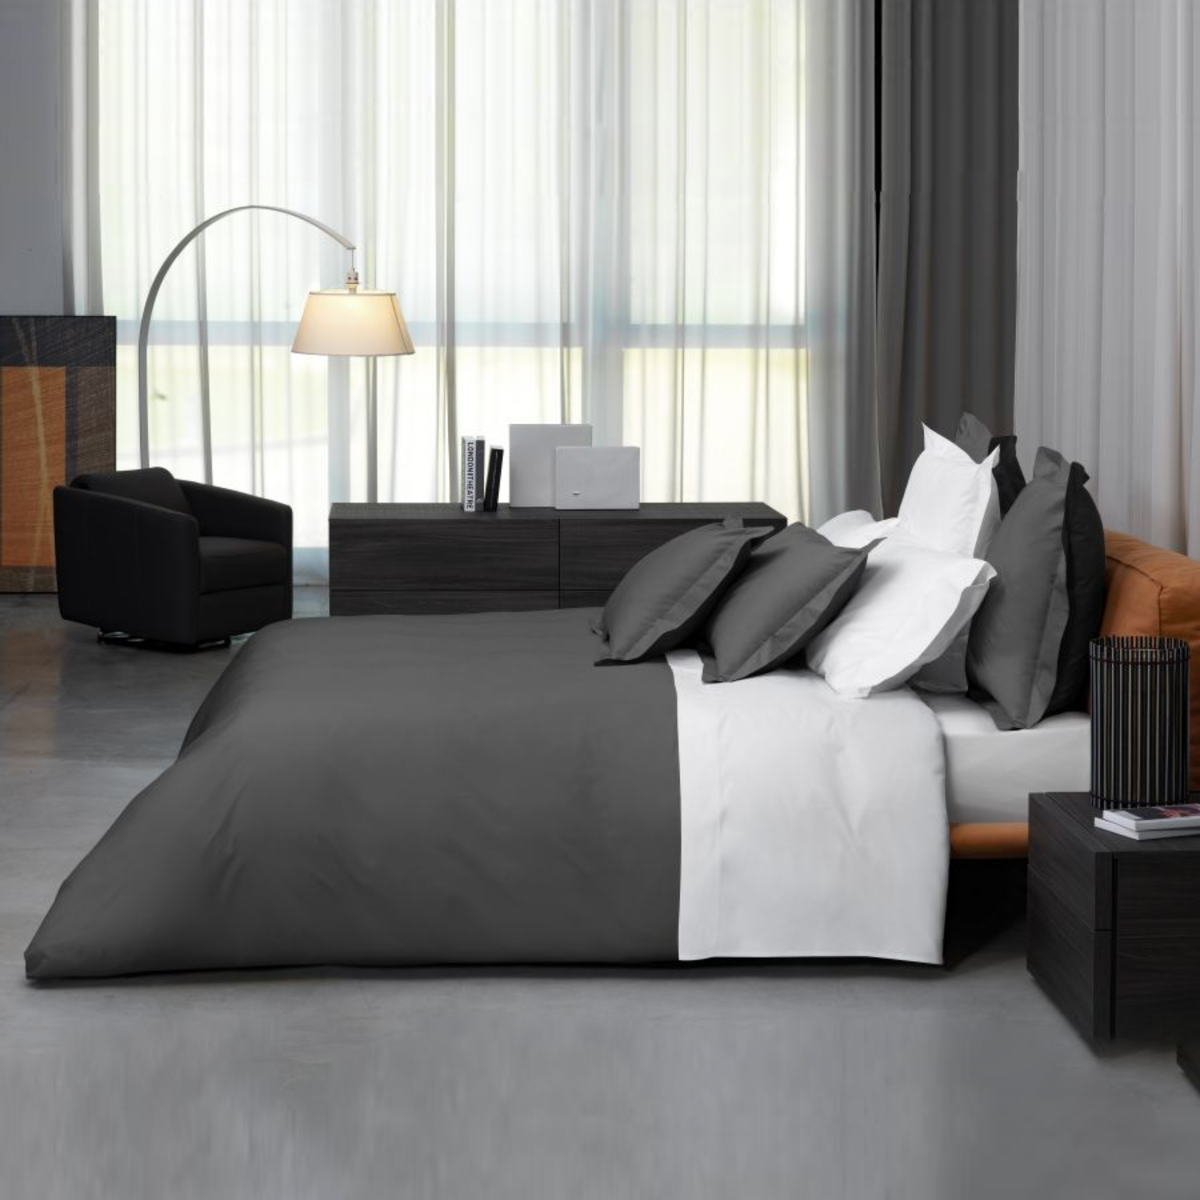 Full Bed Dressed in Signoria Gemma Bedding in Lead Grey Color